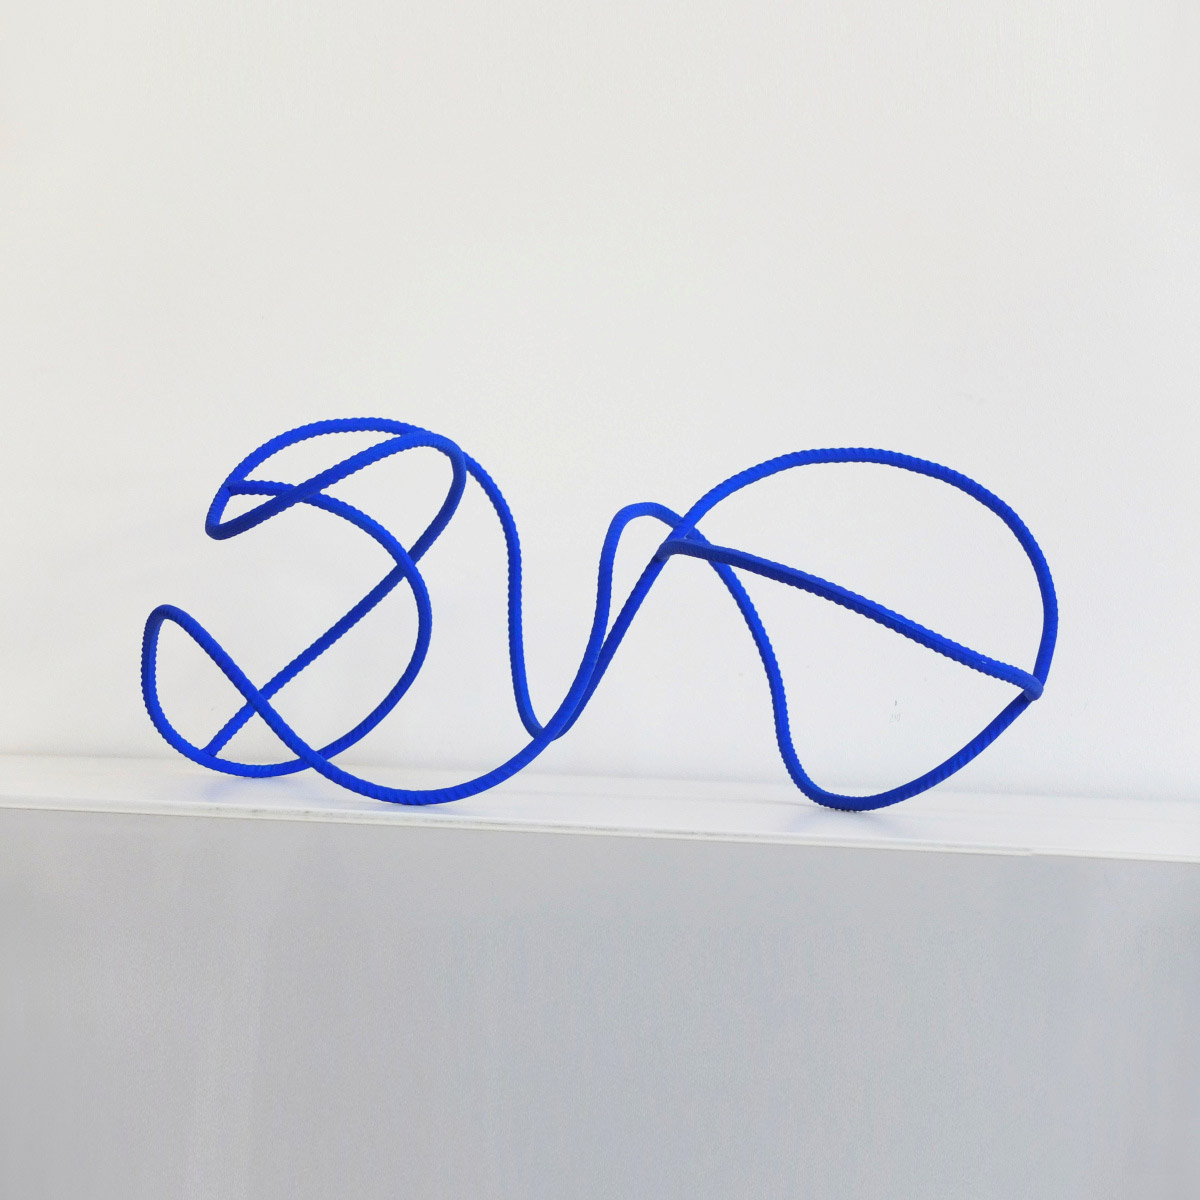 Alex Palenski abstract art sculpture klein blue concrete iron